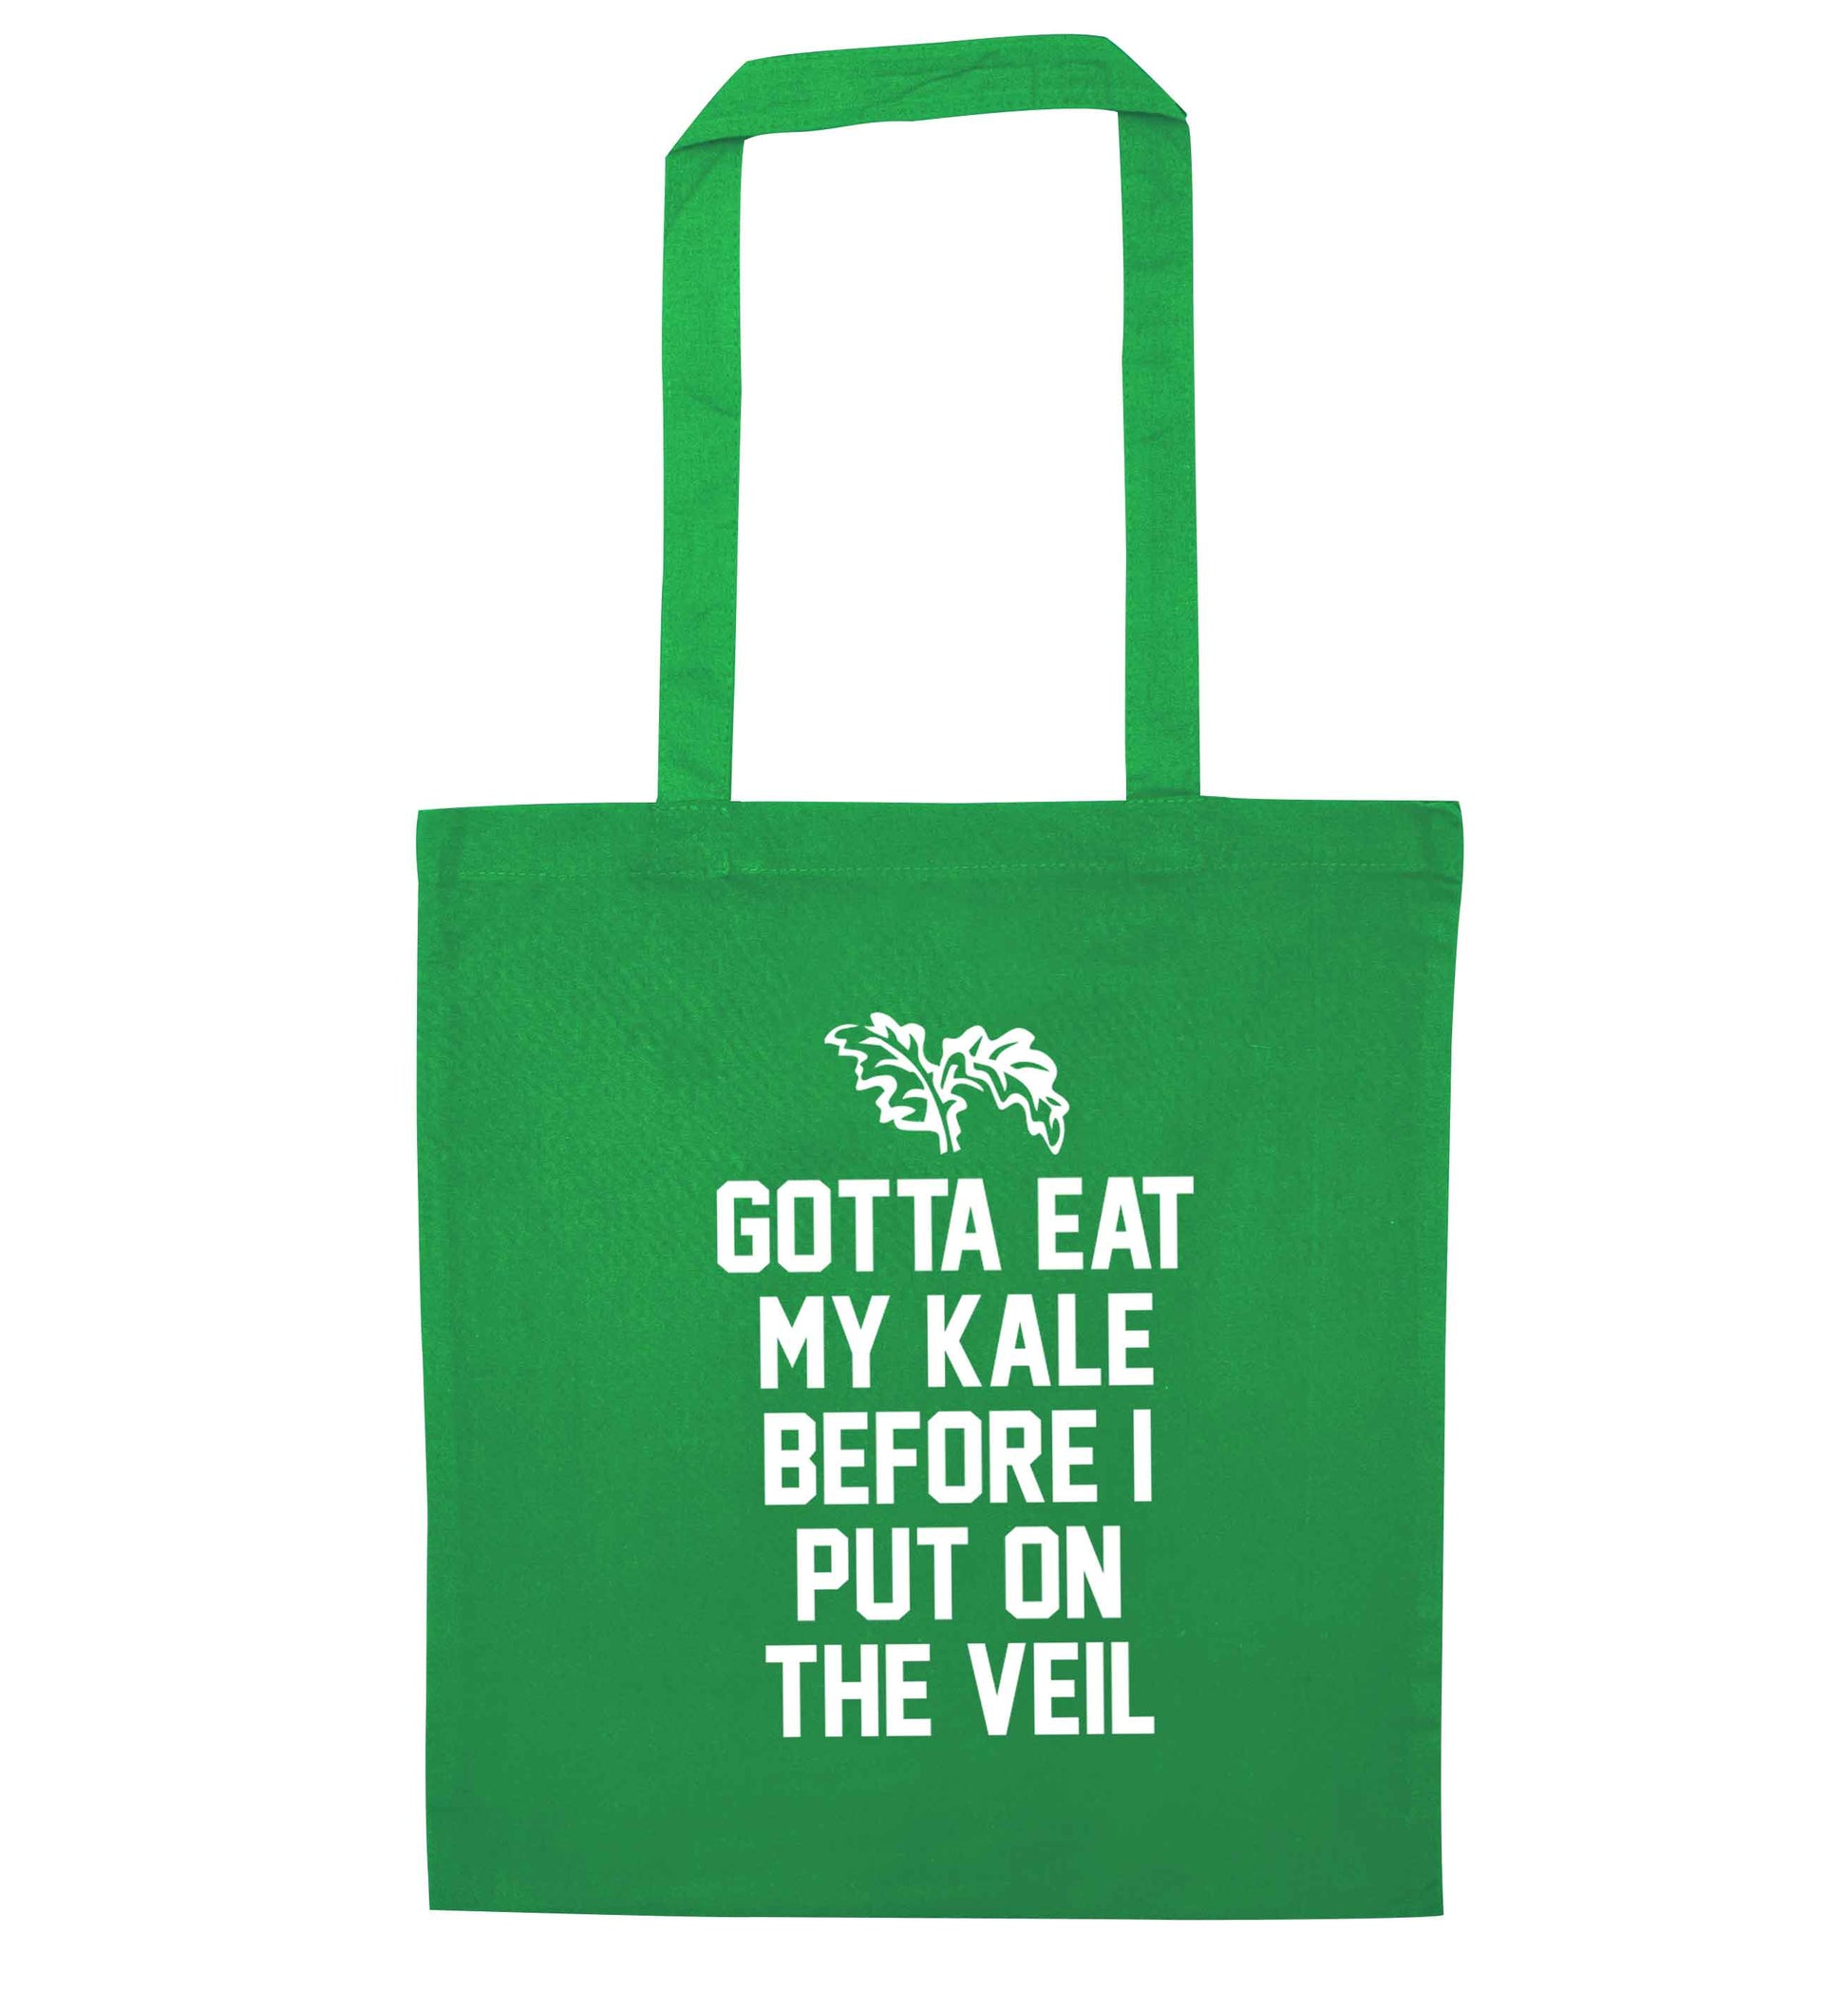 Gotta eat my kale before I put on the veil green tote bag